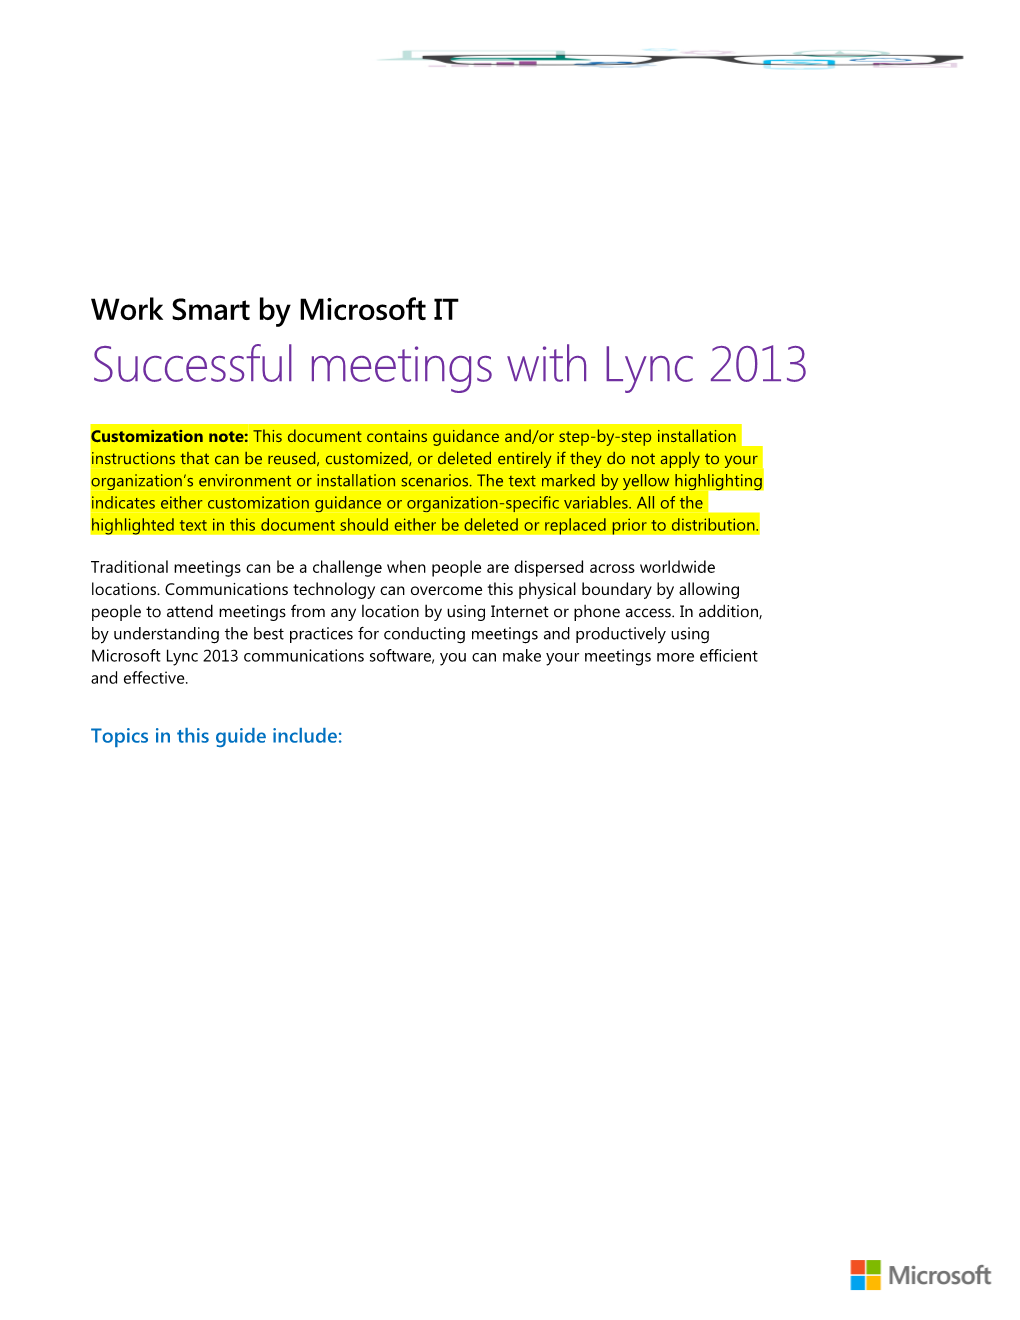 Work Smart: Successful Meetings with Lync 2013